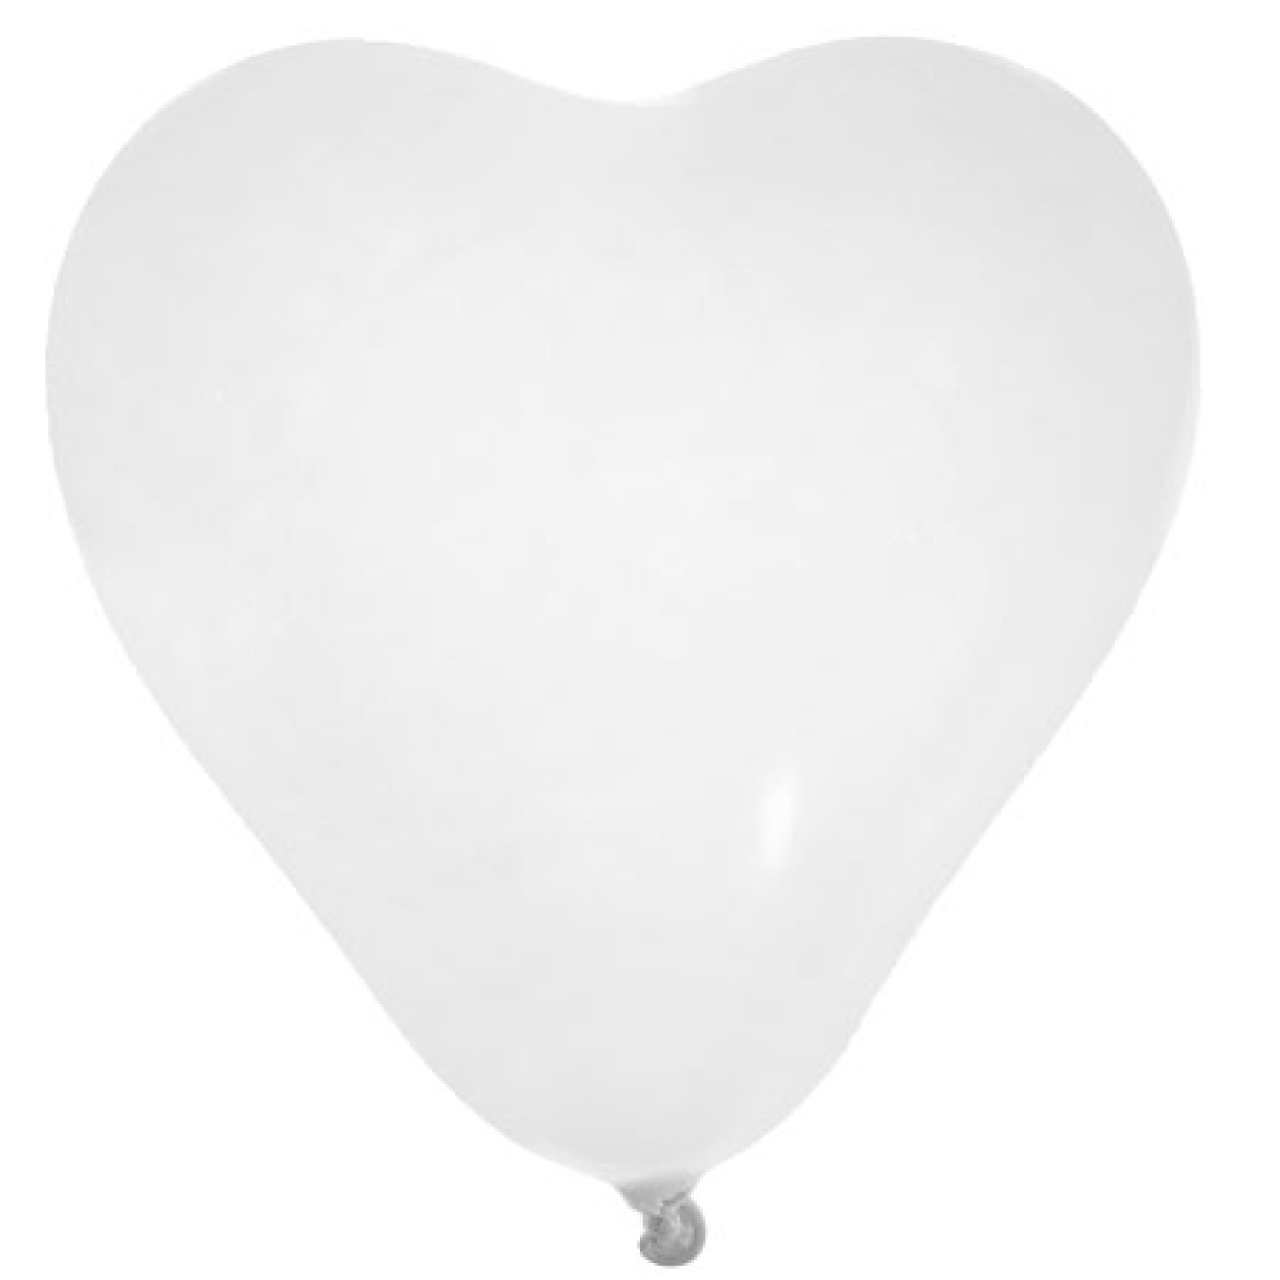 Herzluftballons Weiß, 8 Stück, 25 cm | MEINCUPCAKE Shop